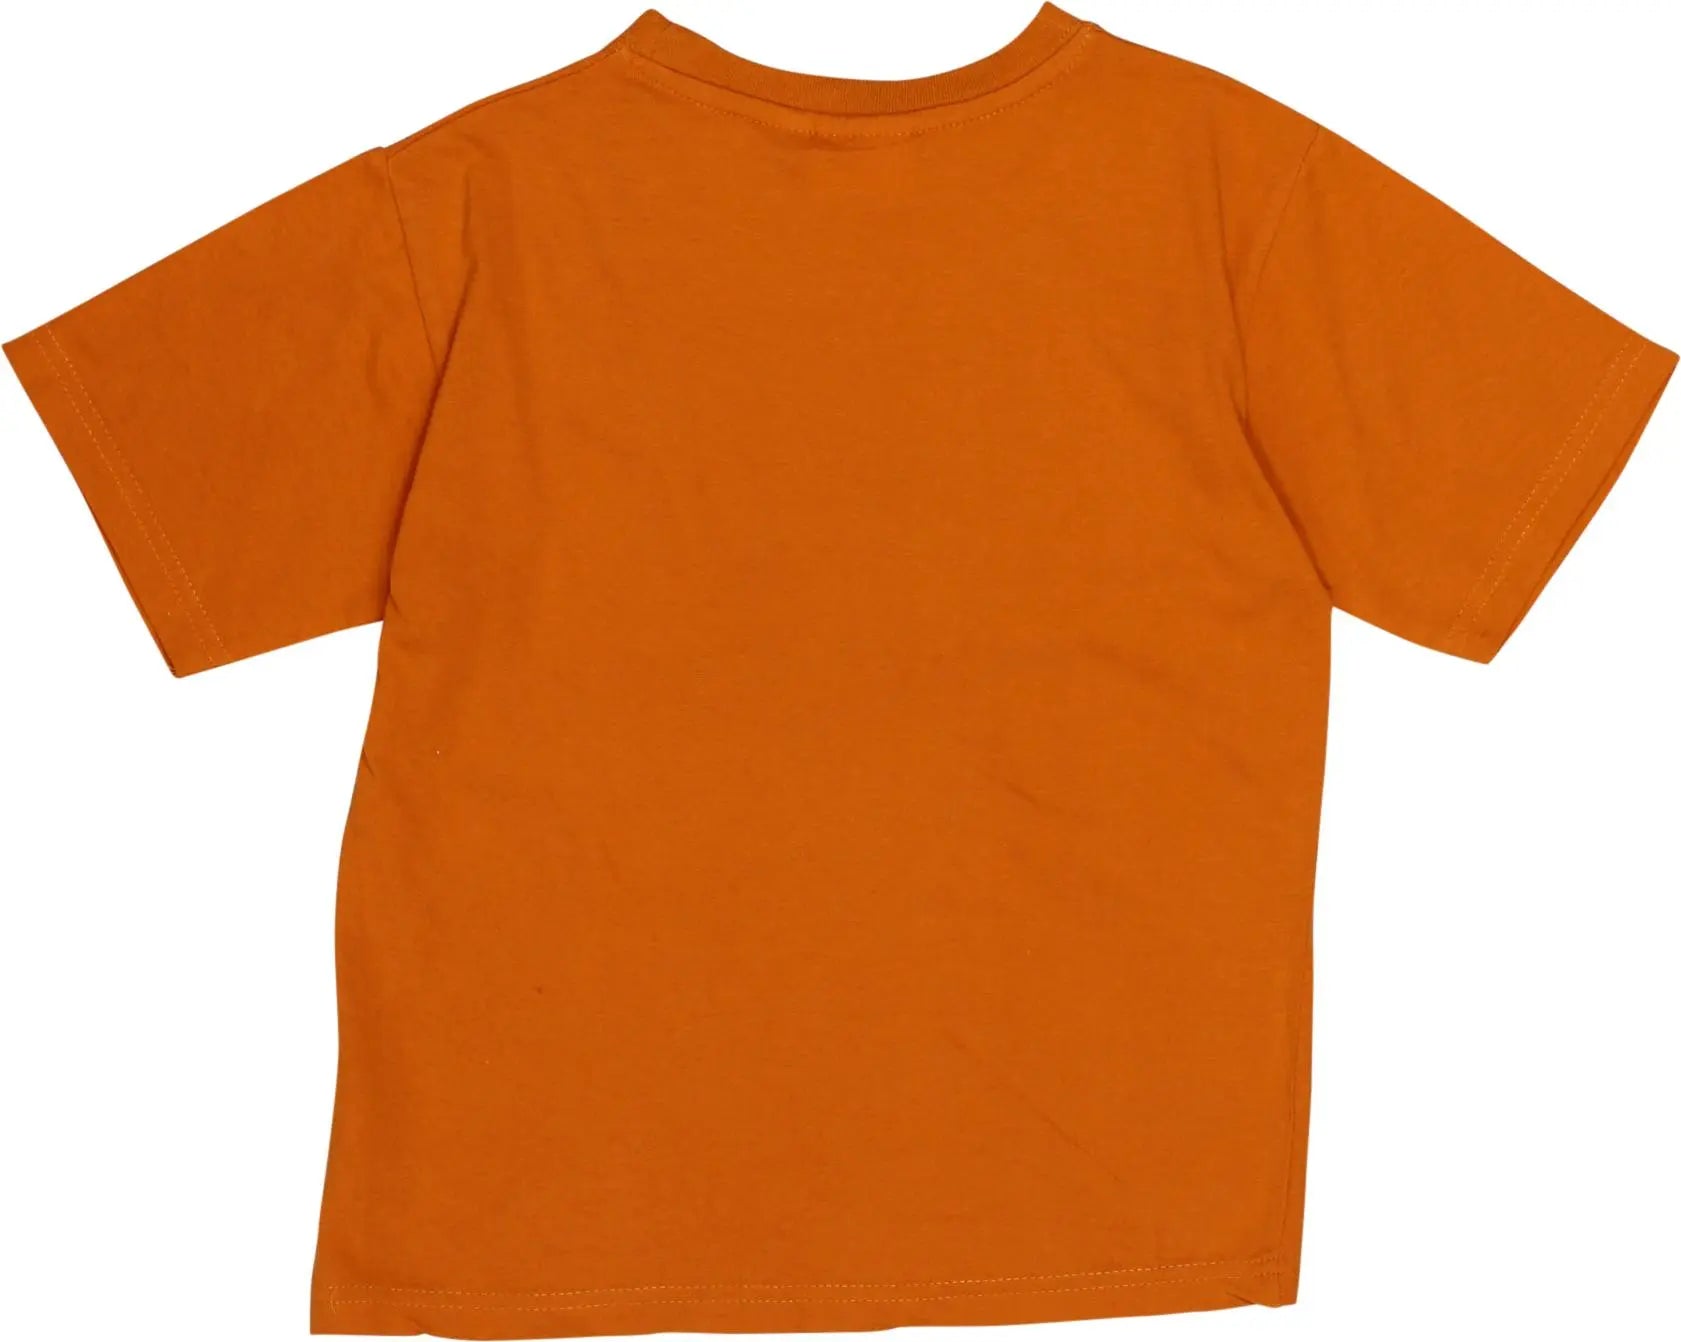 Europe Kids - Orange Holland Short Sleeve Shirt- ThriftTale.com - Vintage and second handclothing